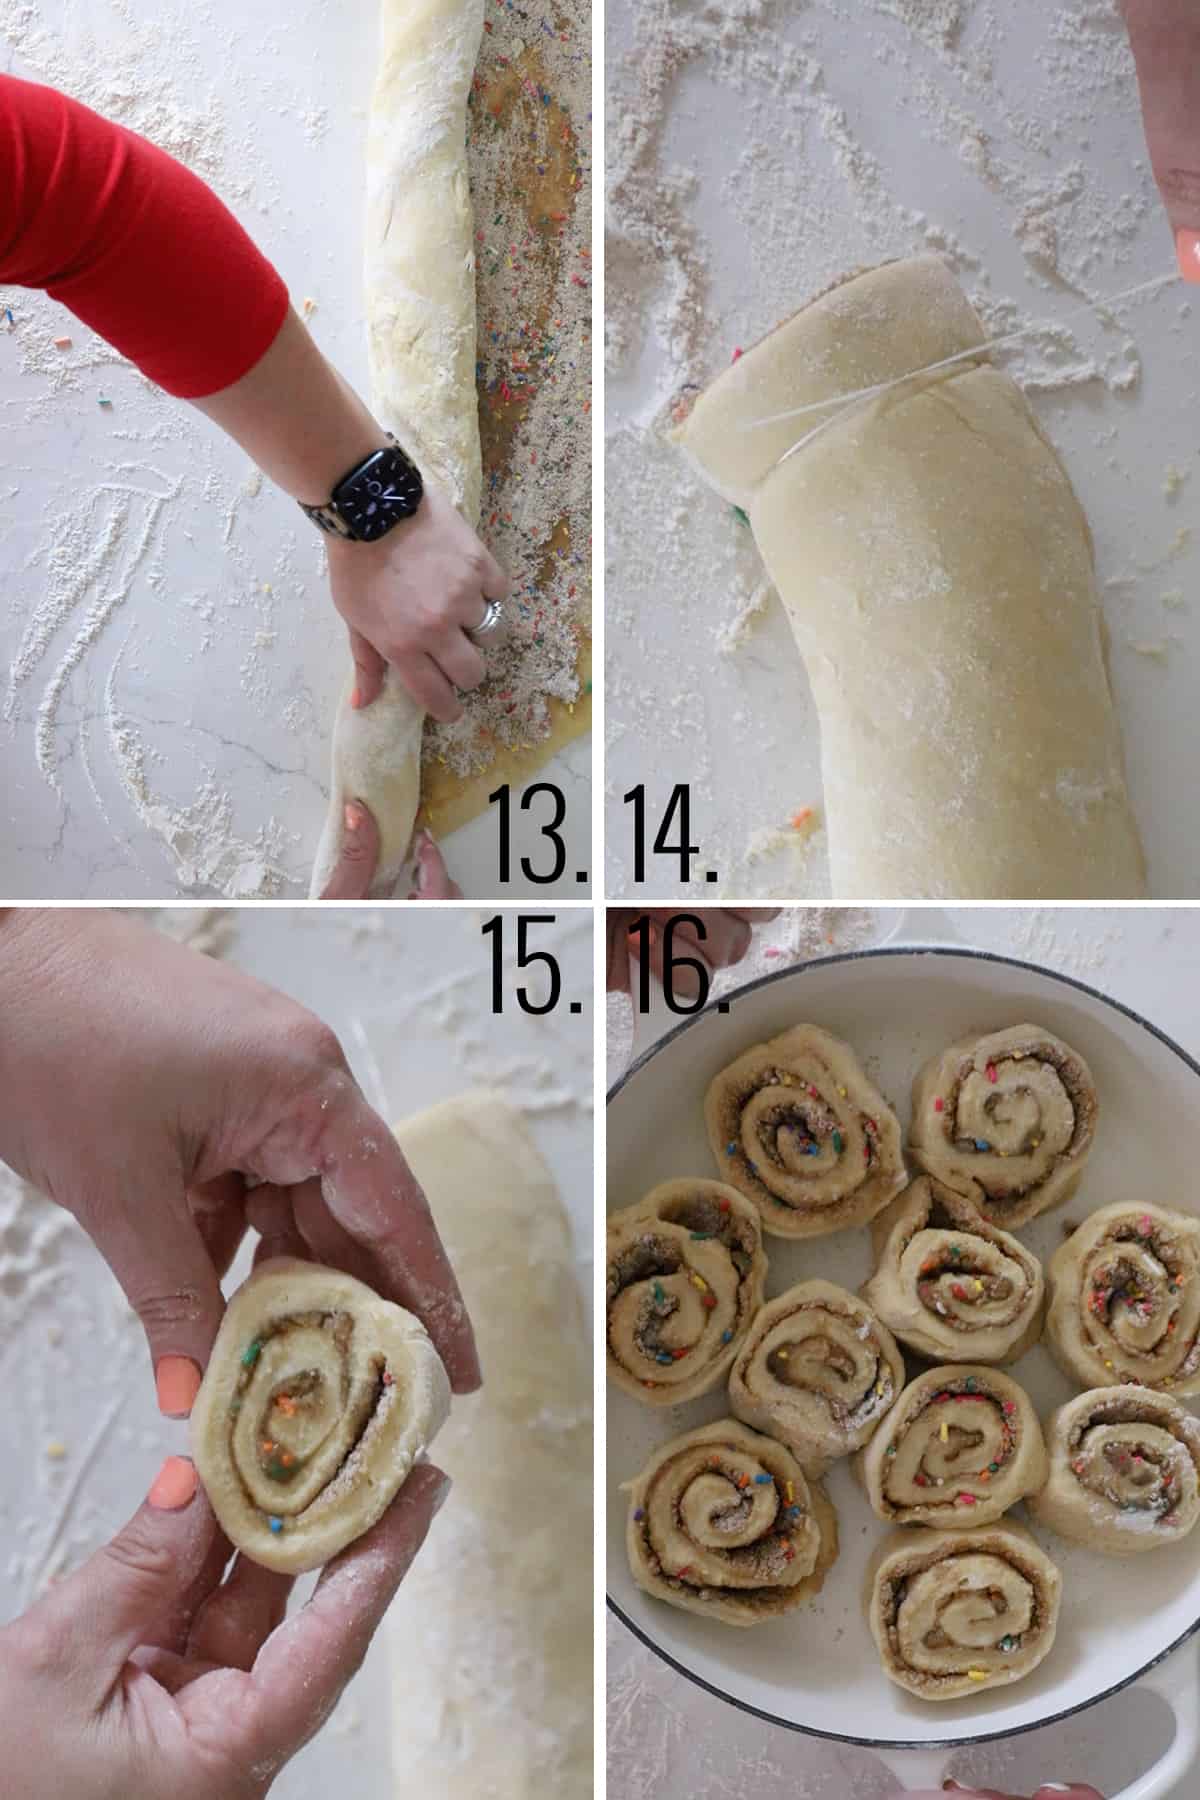 How to make birthday cake cinnamon rolls.